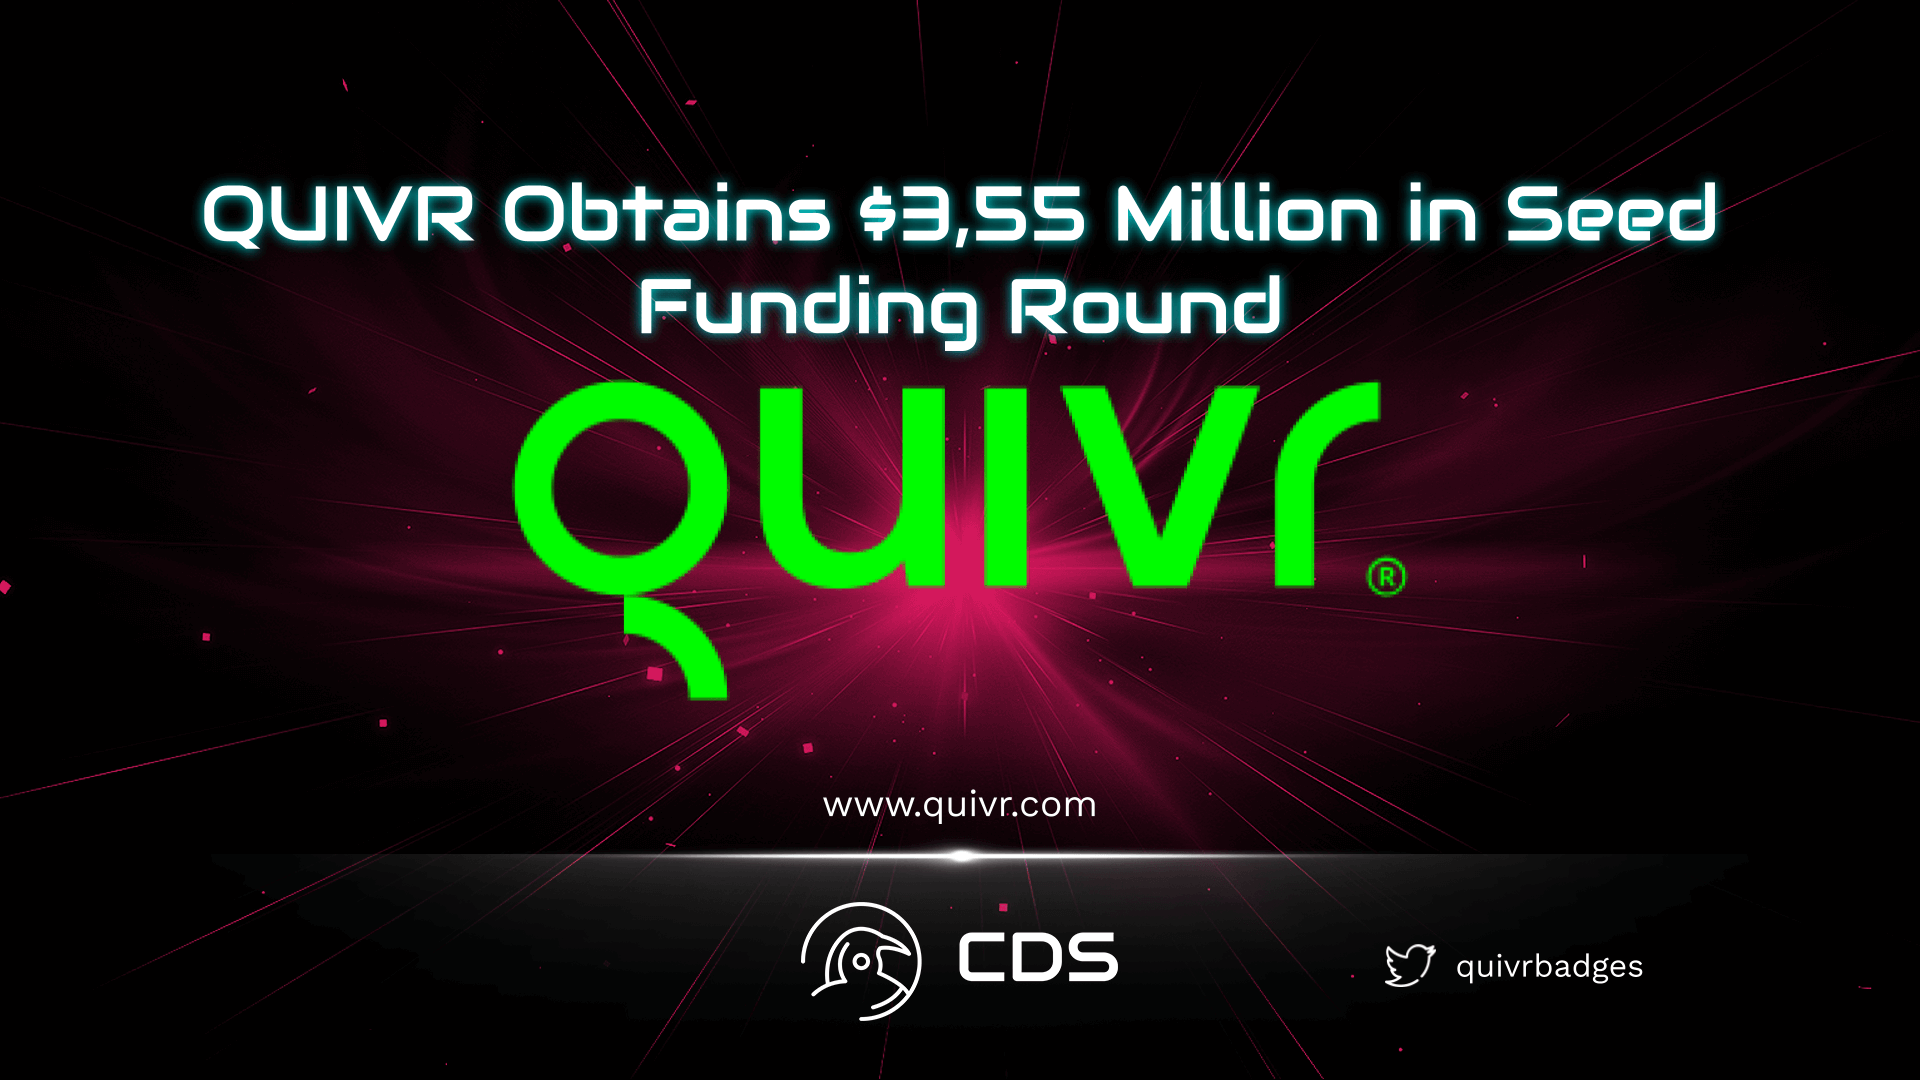 Quivr obstains $3.5 Million